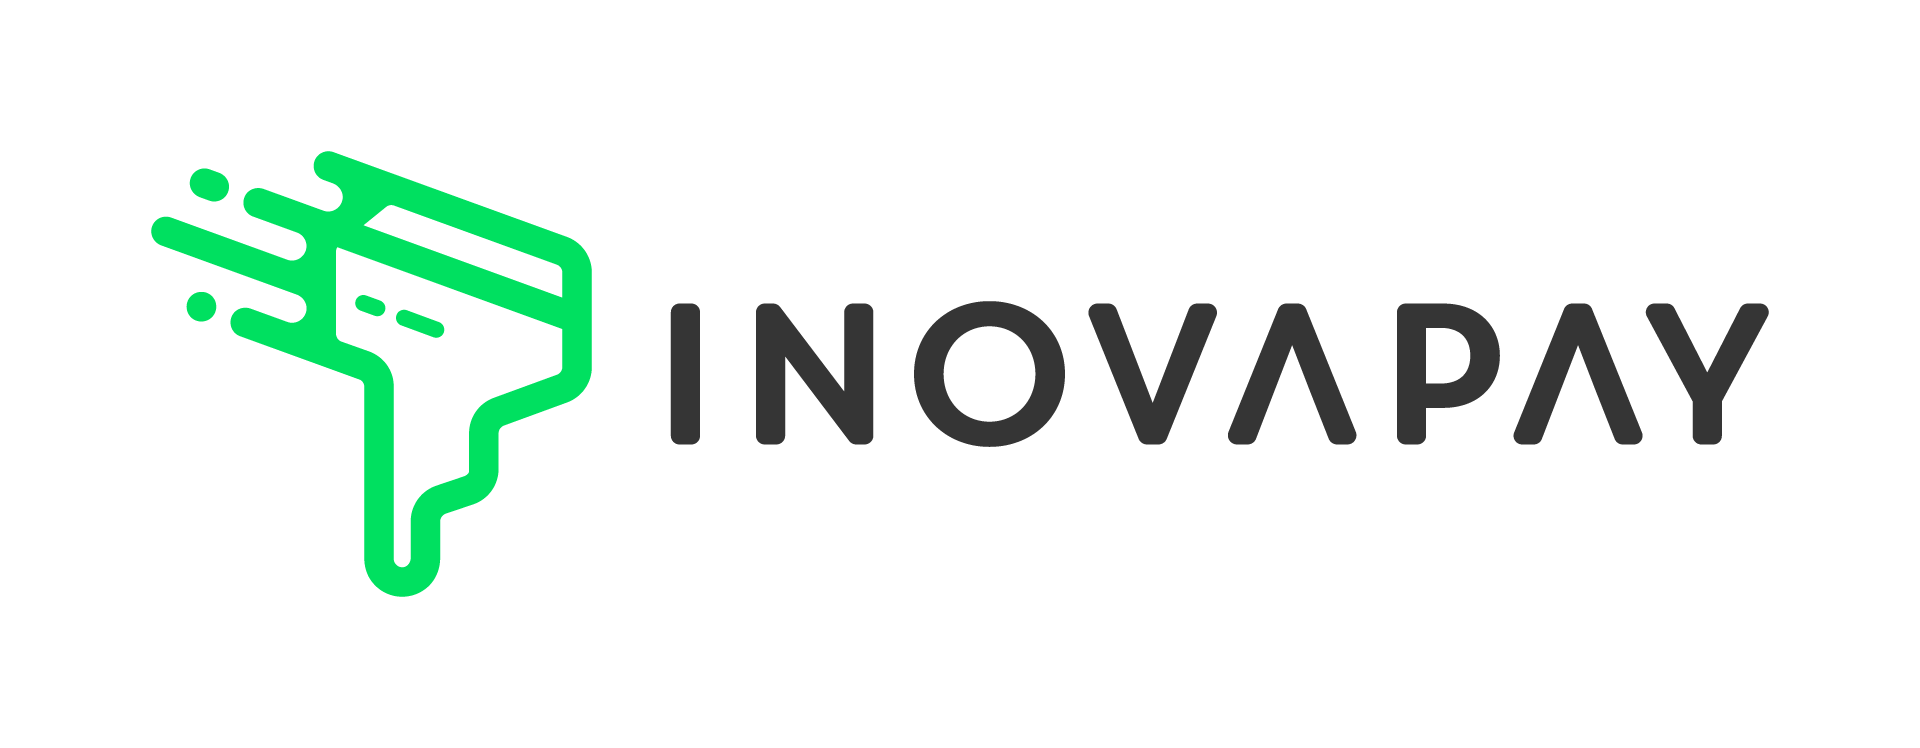 INOVAPAY Logo